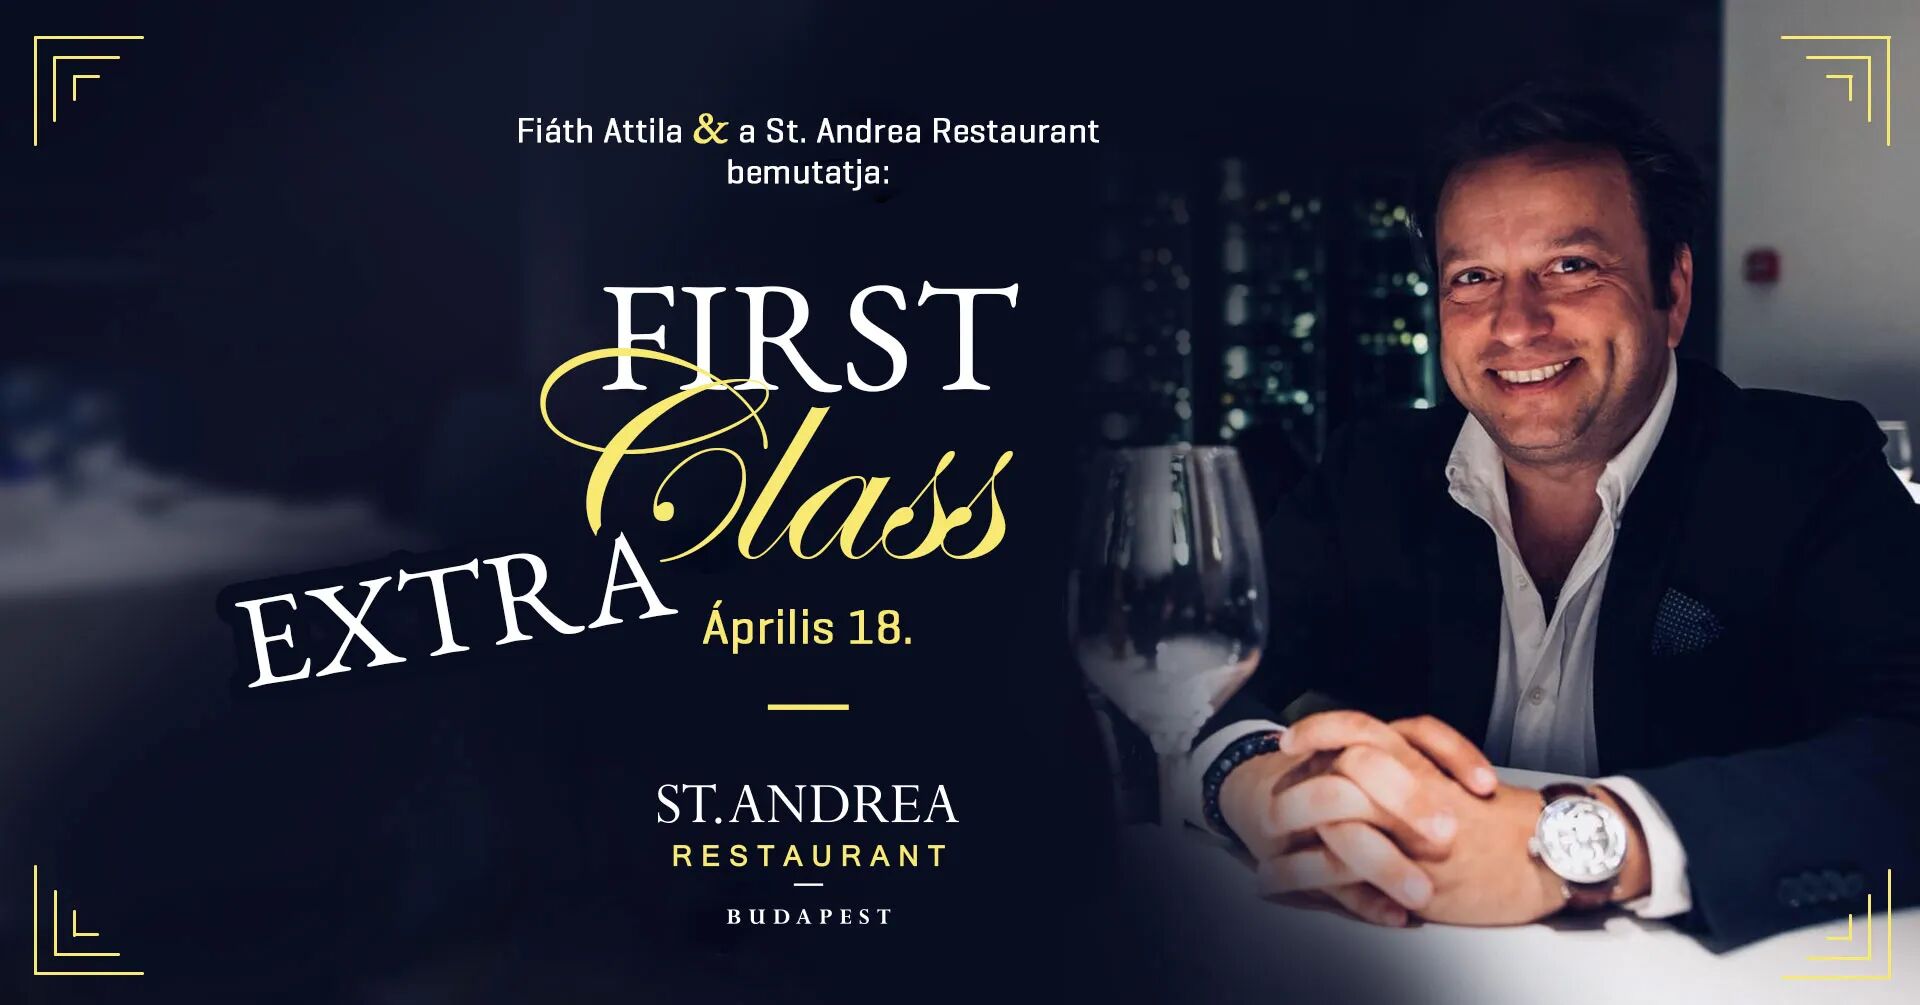 FIÁTH ATTILA & A ST. ANDREA RESTAURANT BEMUTATJA: FIRST CLASS Extra